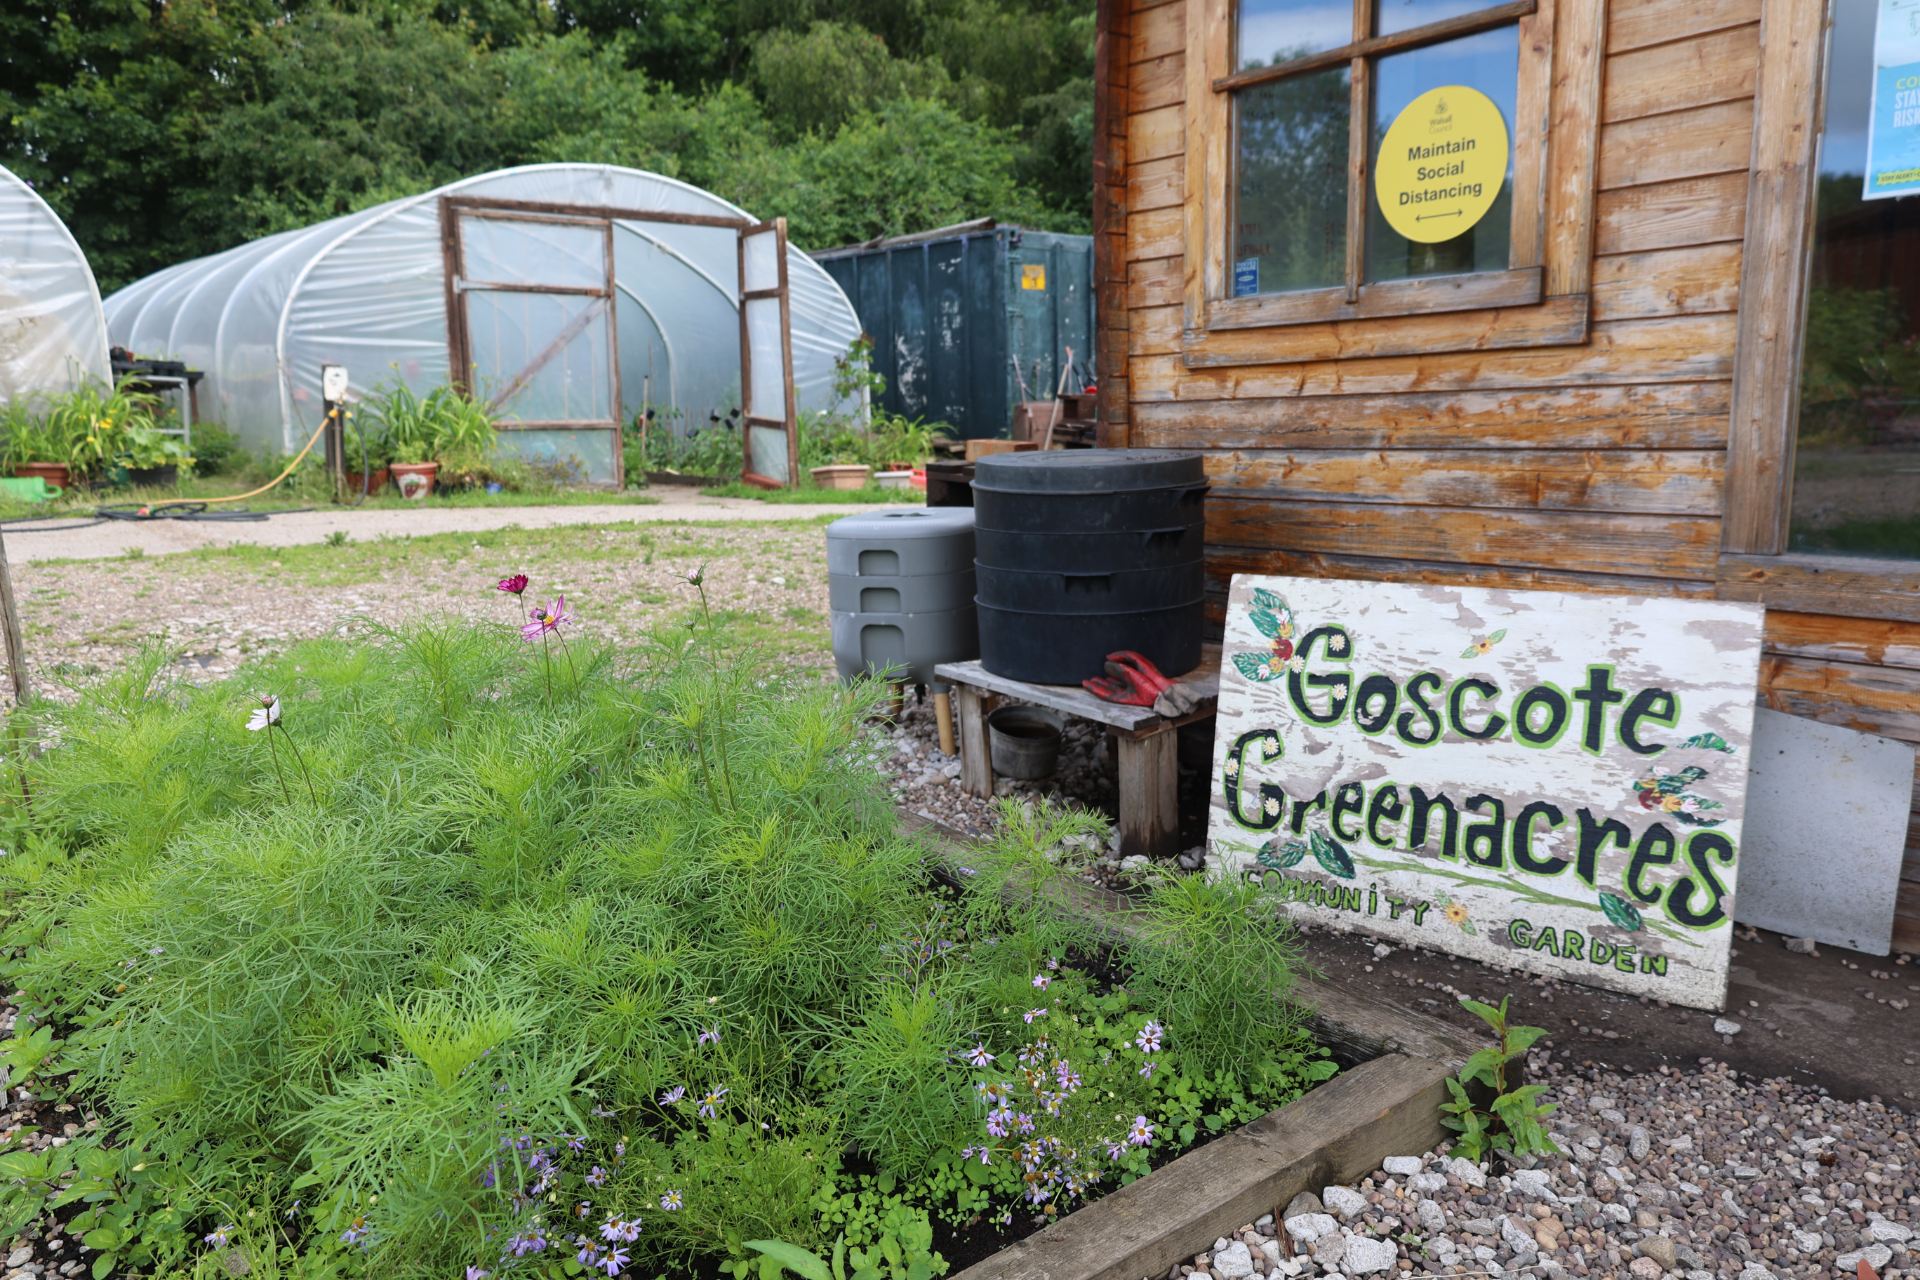 Image of Gascote Greenacres Community Garden and sign reading "Goscote Greenacres, community garden"